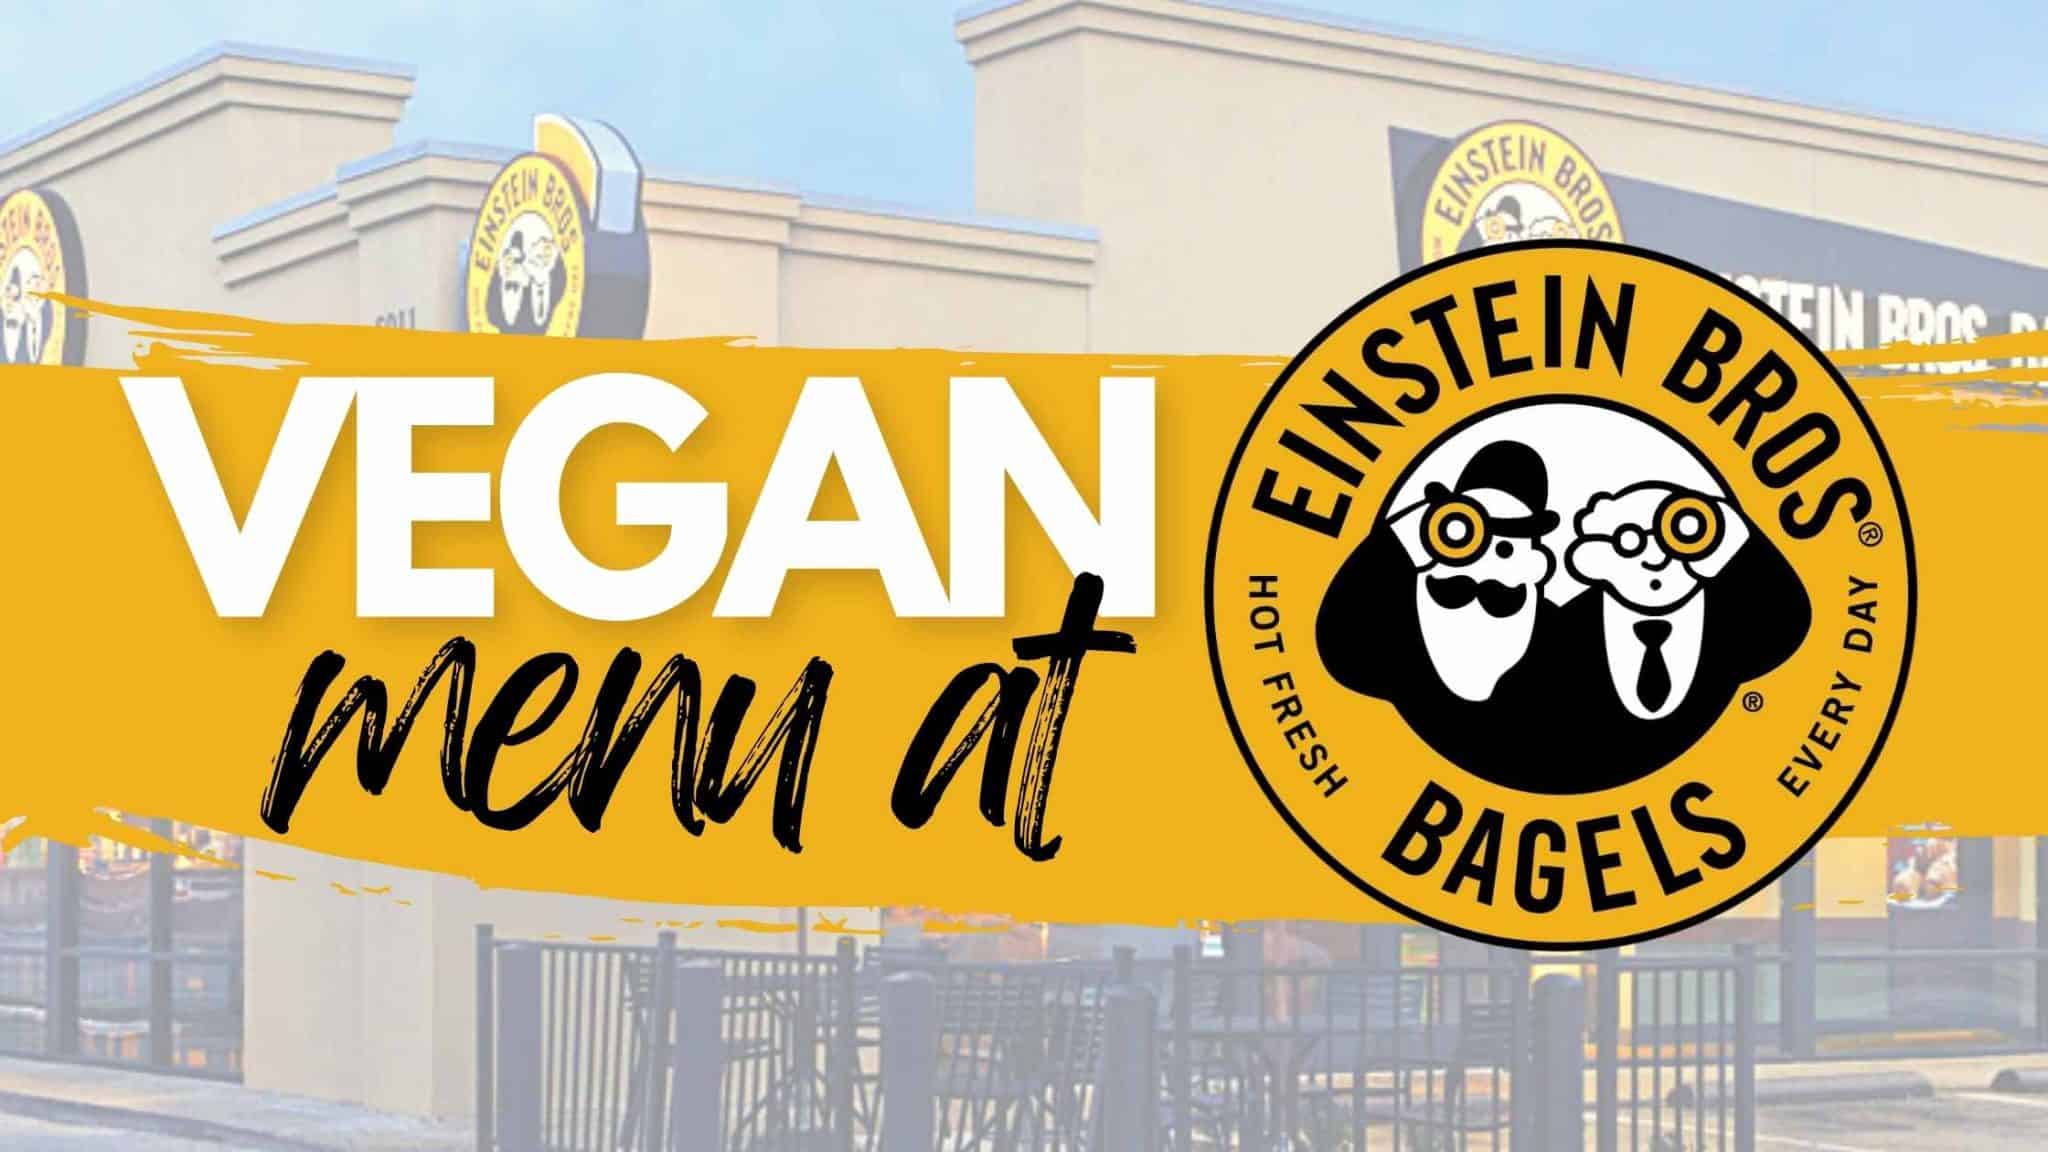 Vegan Einstein Bros bagels menu options sign.